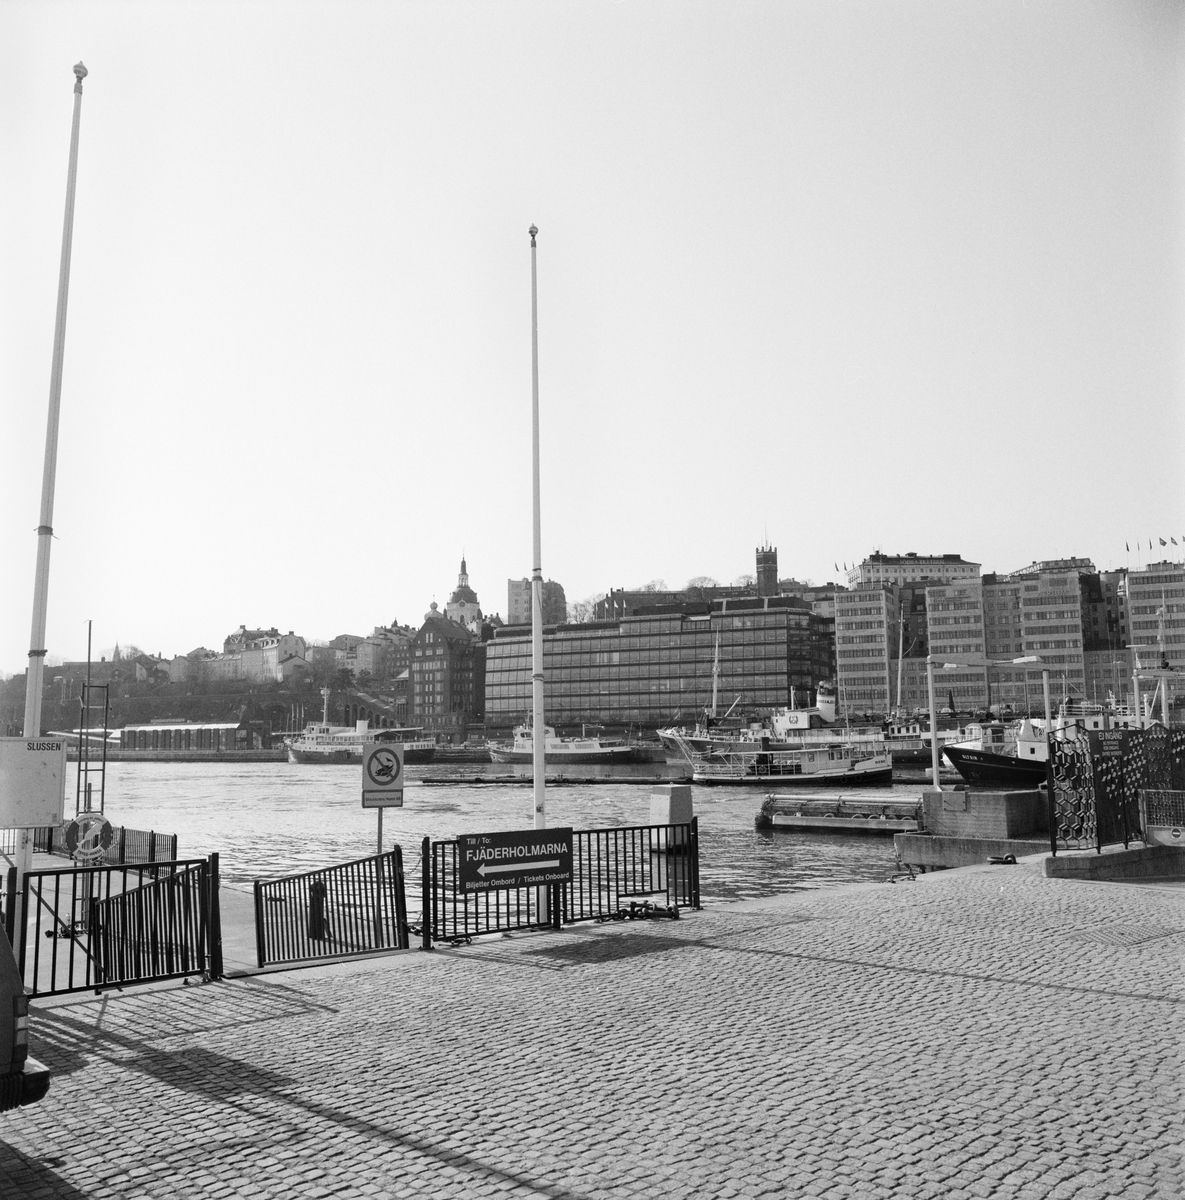 Stockholm längs vattenlinjen
Fotodatum 20020417
Stockholmsresan